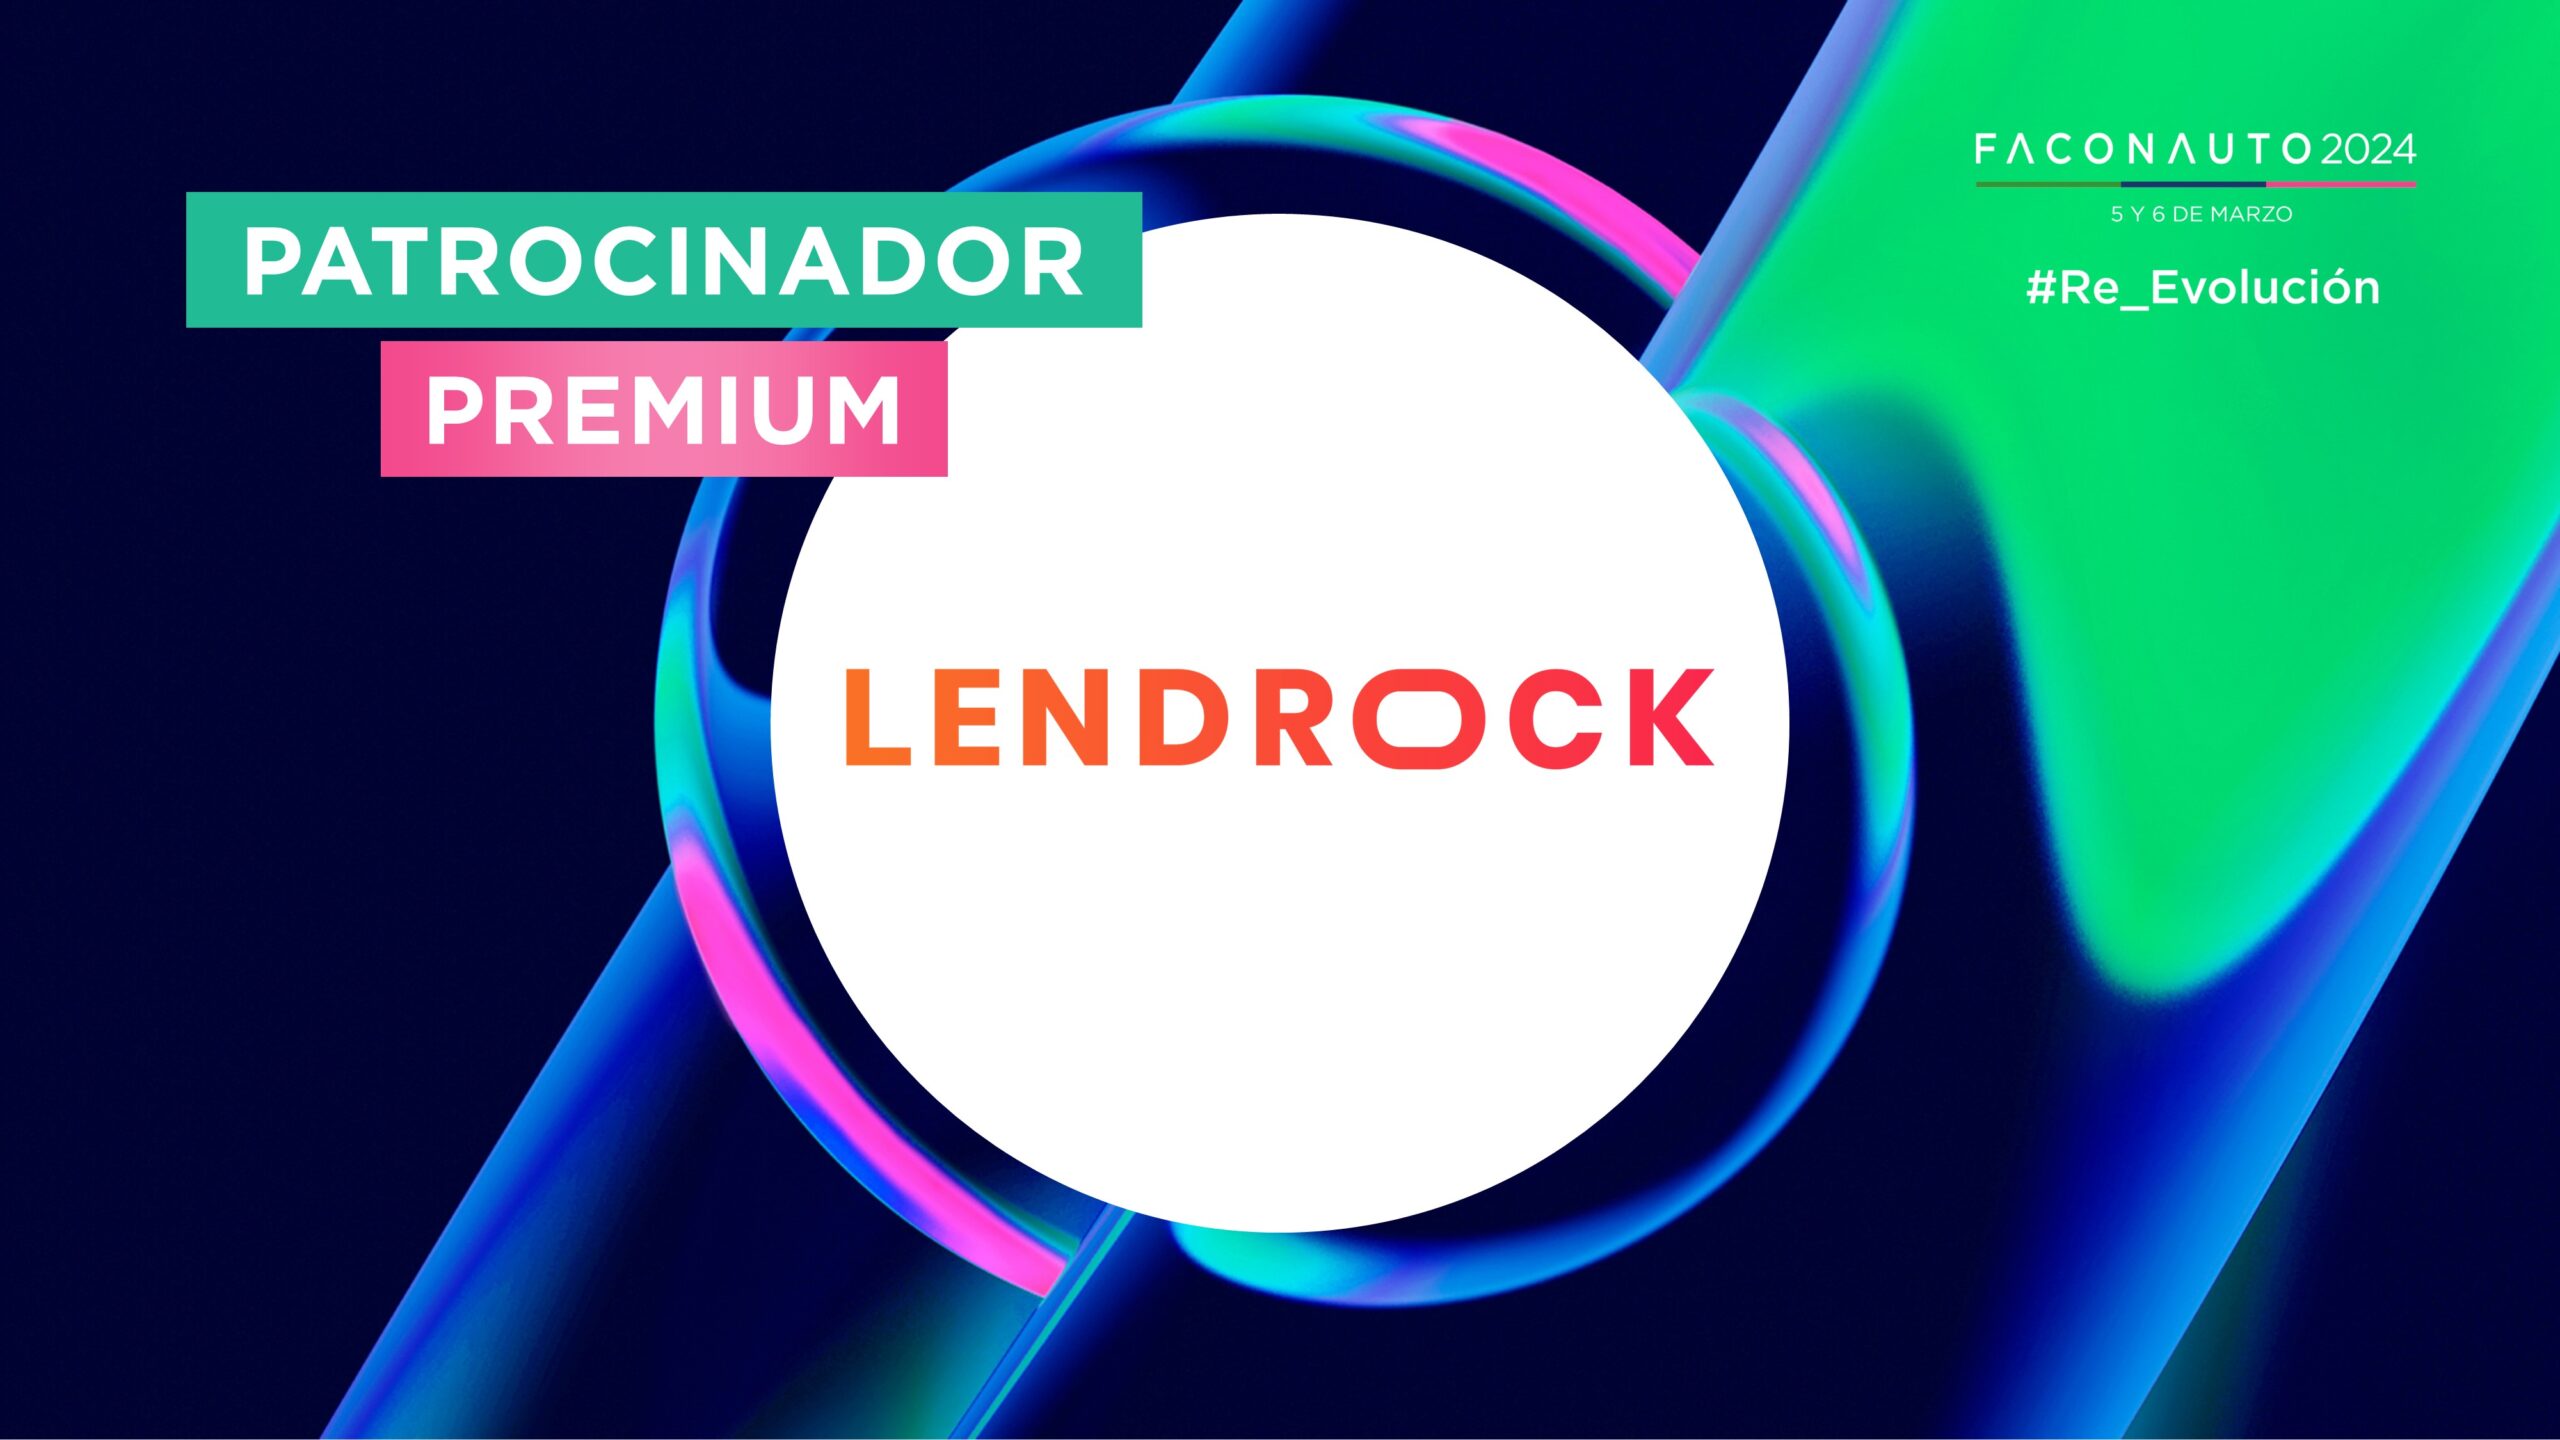 Lendrock Faconauto 2024